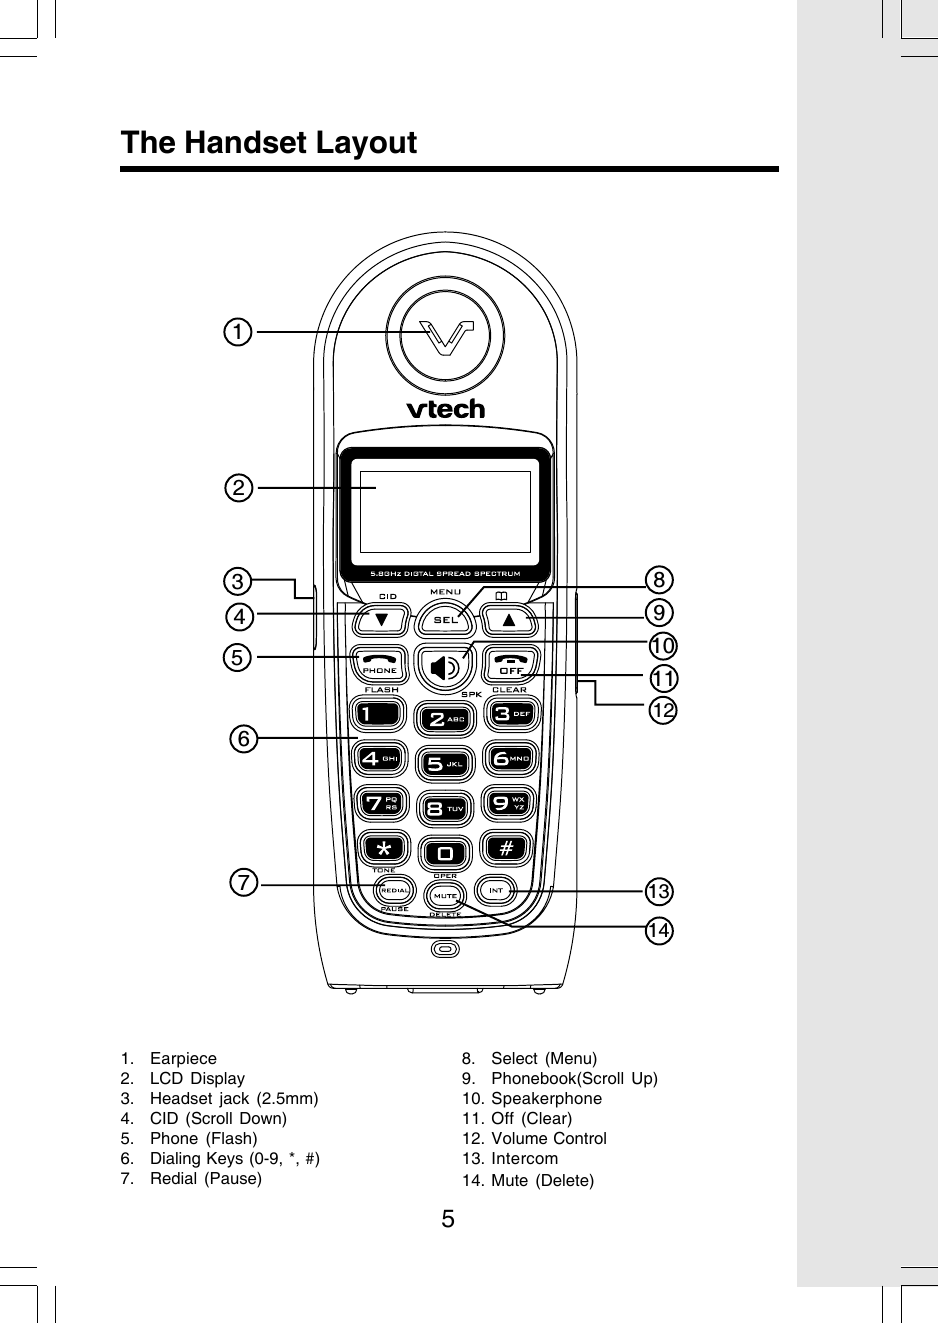 51. Earpiece2. LCD Display3. Headset jack (2.5mm)4. CID (Scroll Down)5. Phone (Flash)6. Dialing Keys (0-9, *, #)7. Redial (Pause)The Handset Layout8. Select (Menu)9. Phonebook(Scroll Up)10. Speakerphone11. Off (Clear)12. Volume Control13. Intercom14. Mute (Delete)1245687101213911314